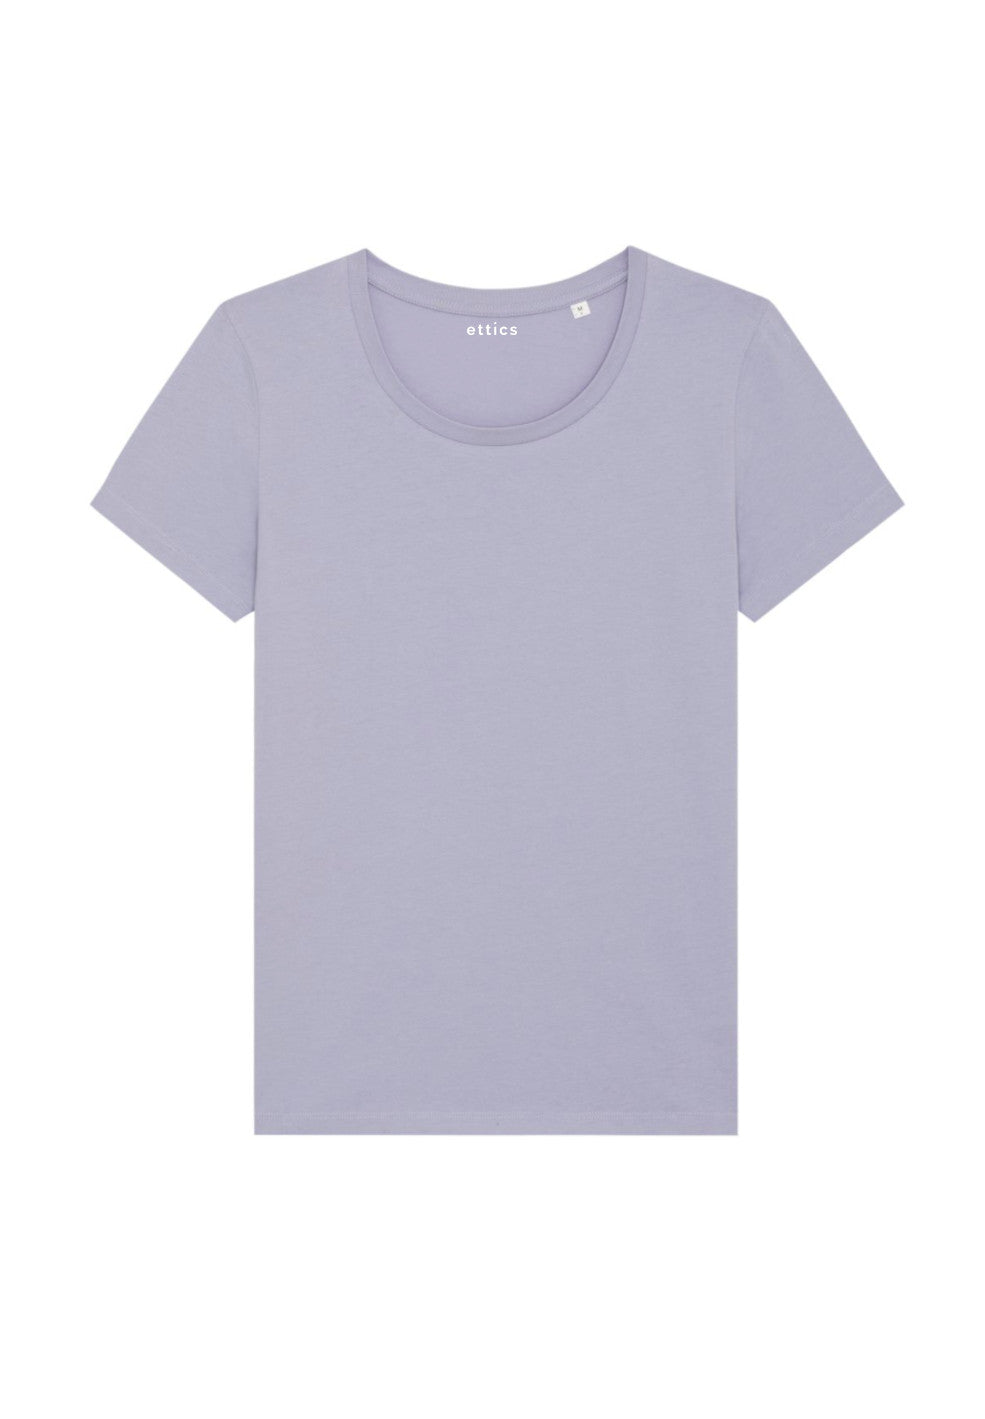 expresser lavender t-shirt